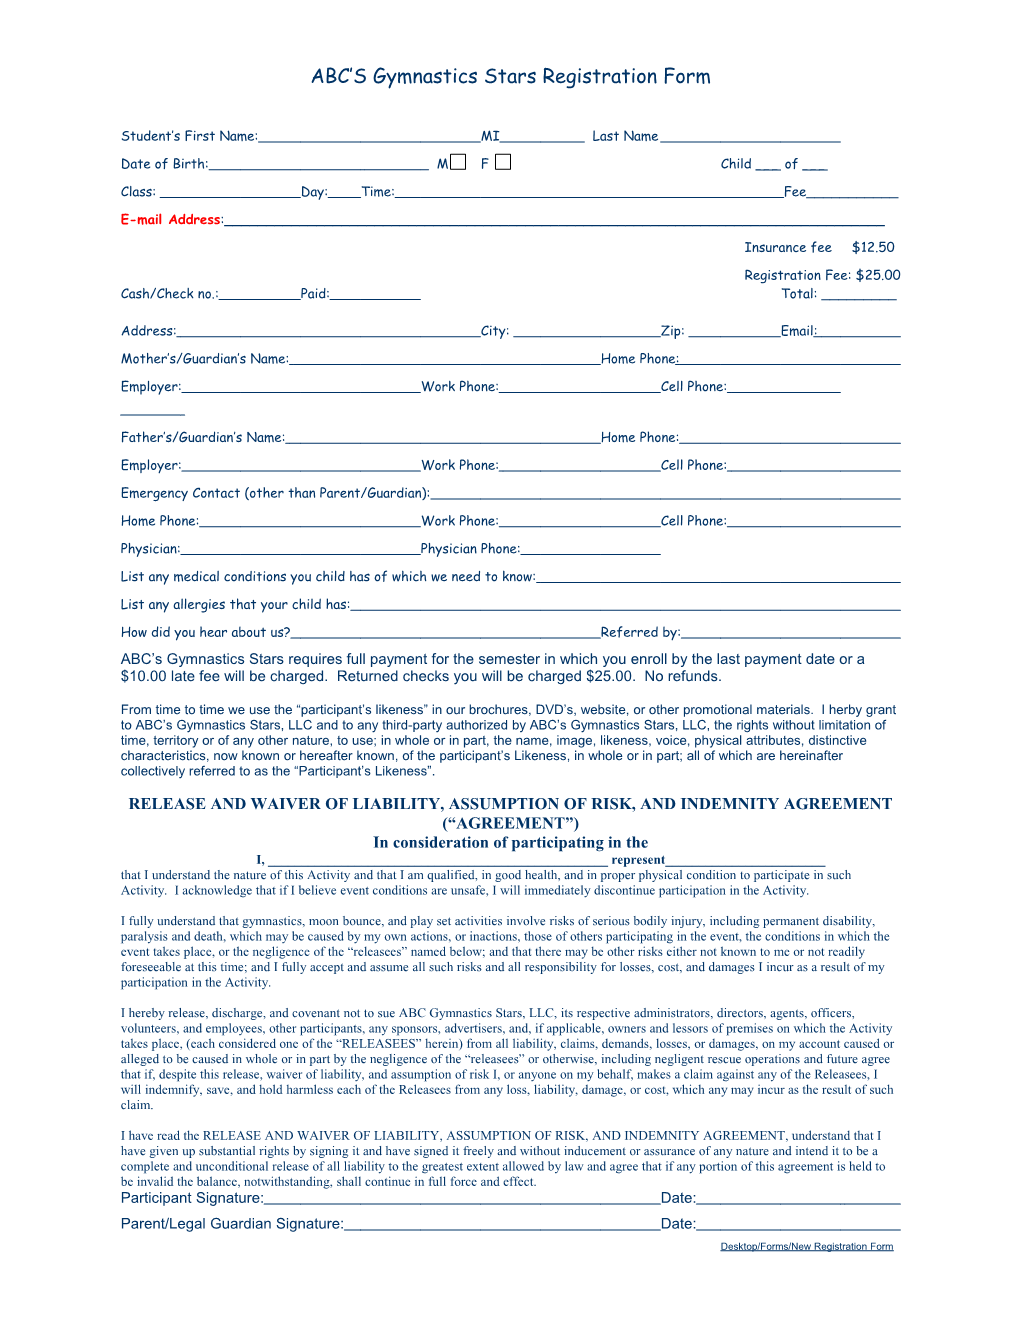 ABC S Gymnastics Stars Registration Form 2006-2007